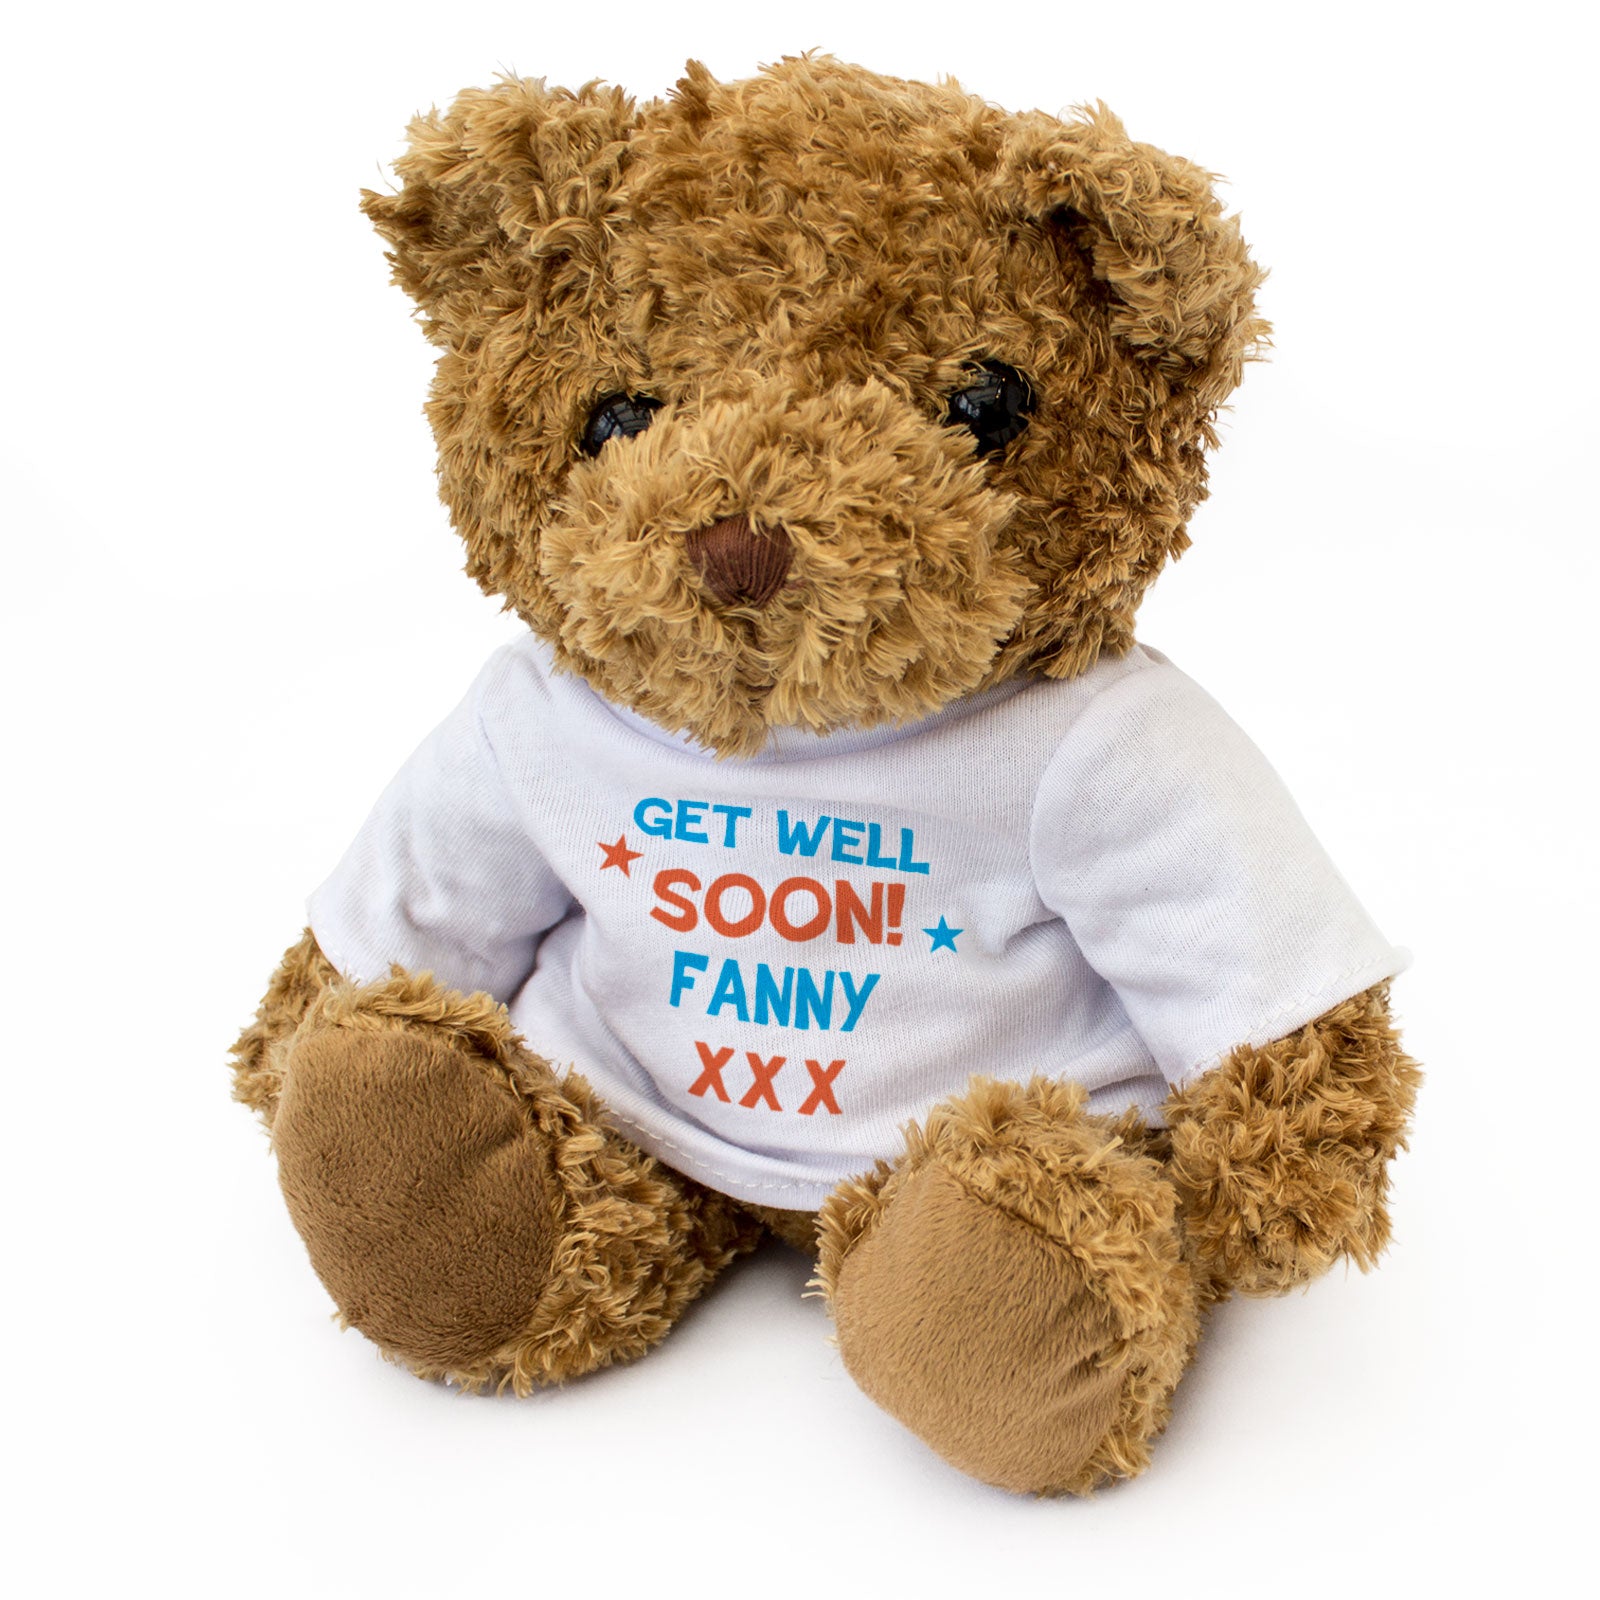 Get Well Soon Fanny - Teddy Bear